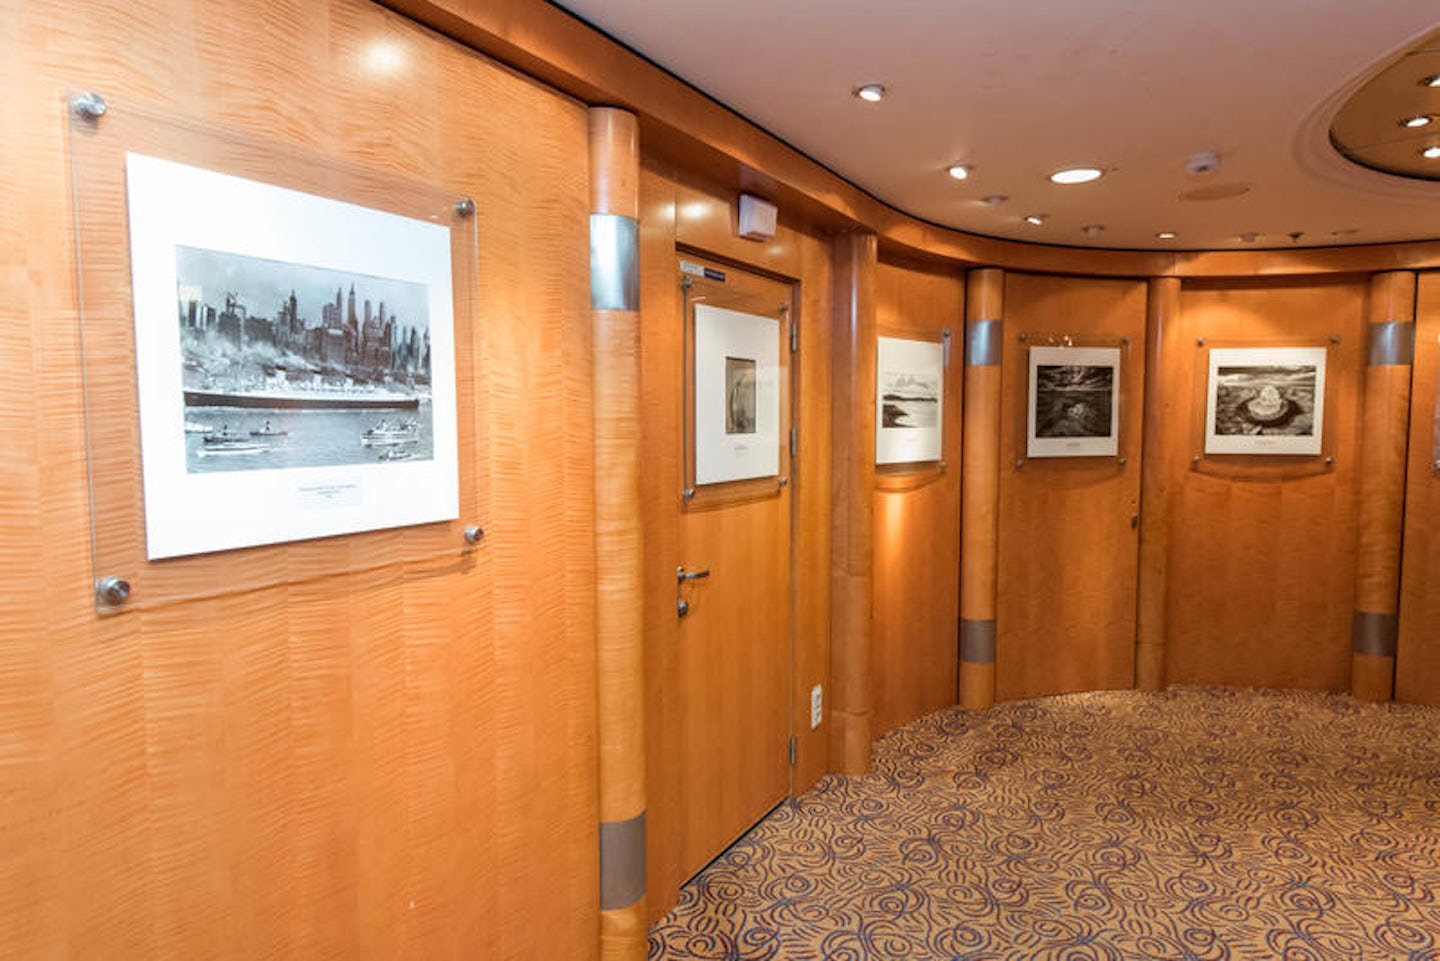 Art & Photo Gallery on Brilliance of the Seas